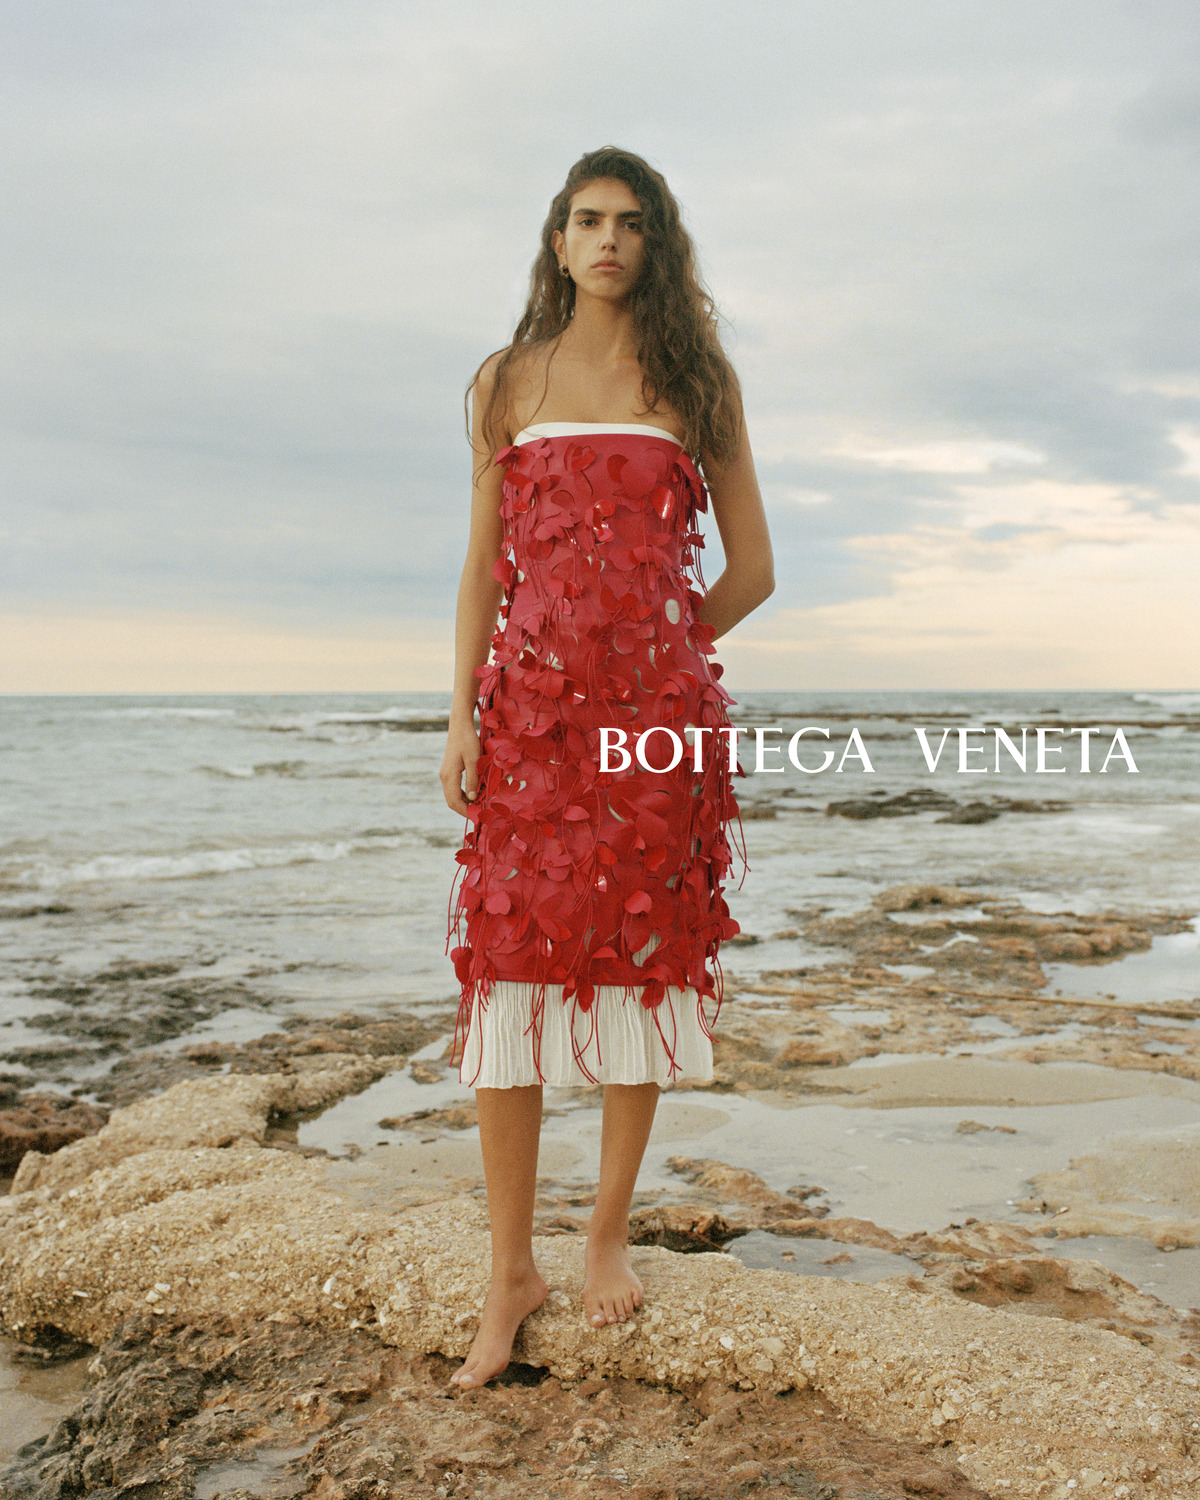 Bottega Veneta More Campaign Photos for Spring / Summer 2014 - Spotted  Fashion